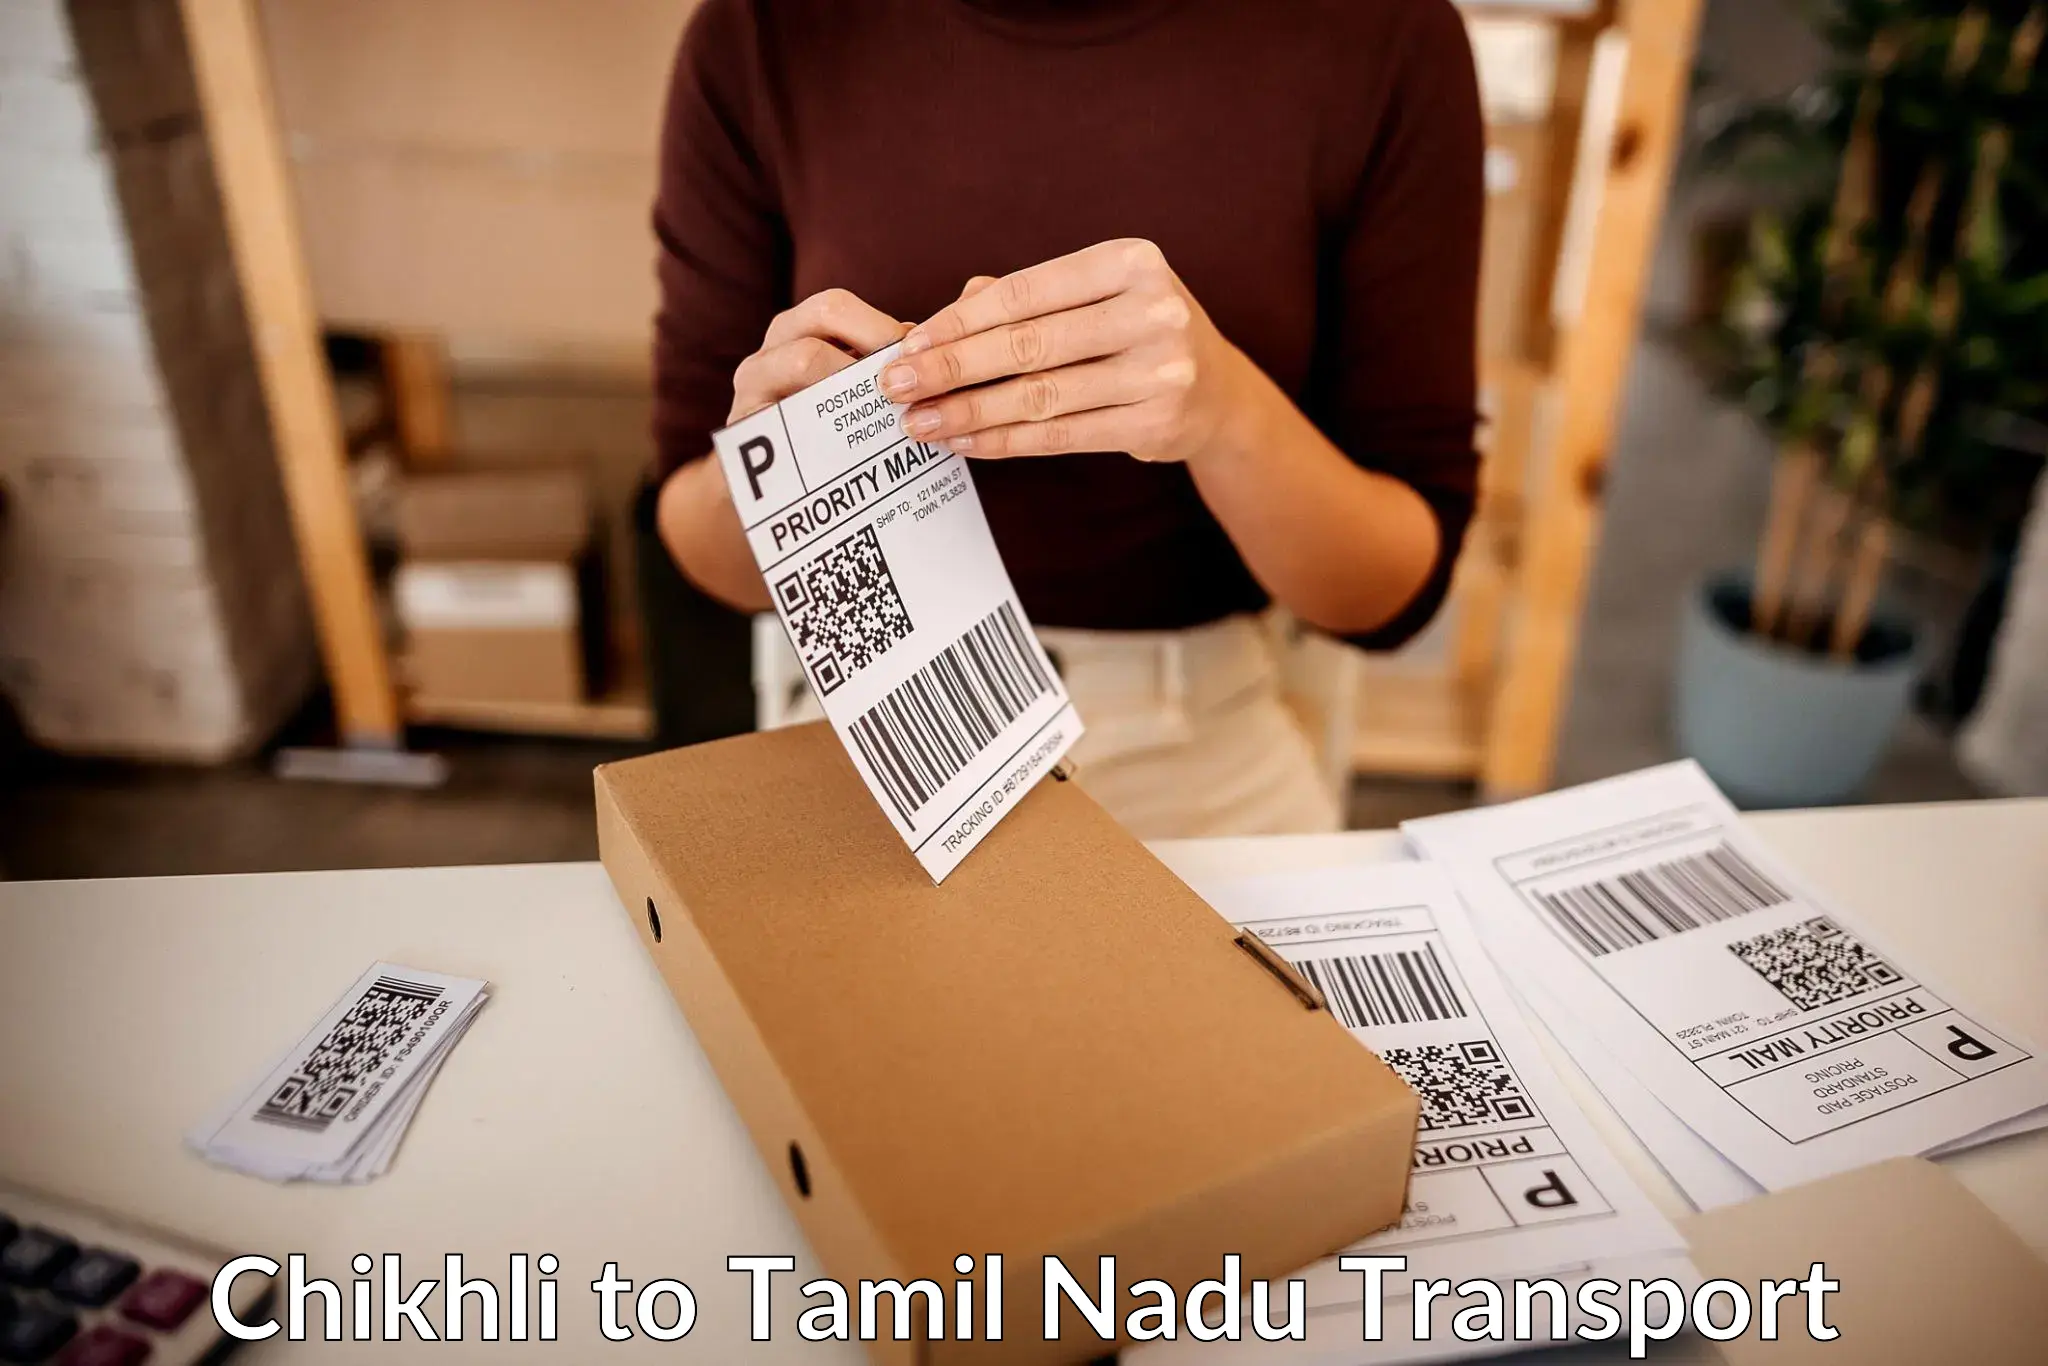 Delivery service Chikhli to Tirukalukundram